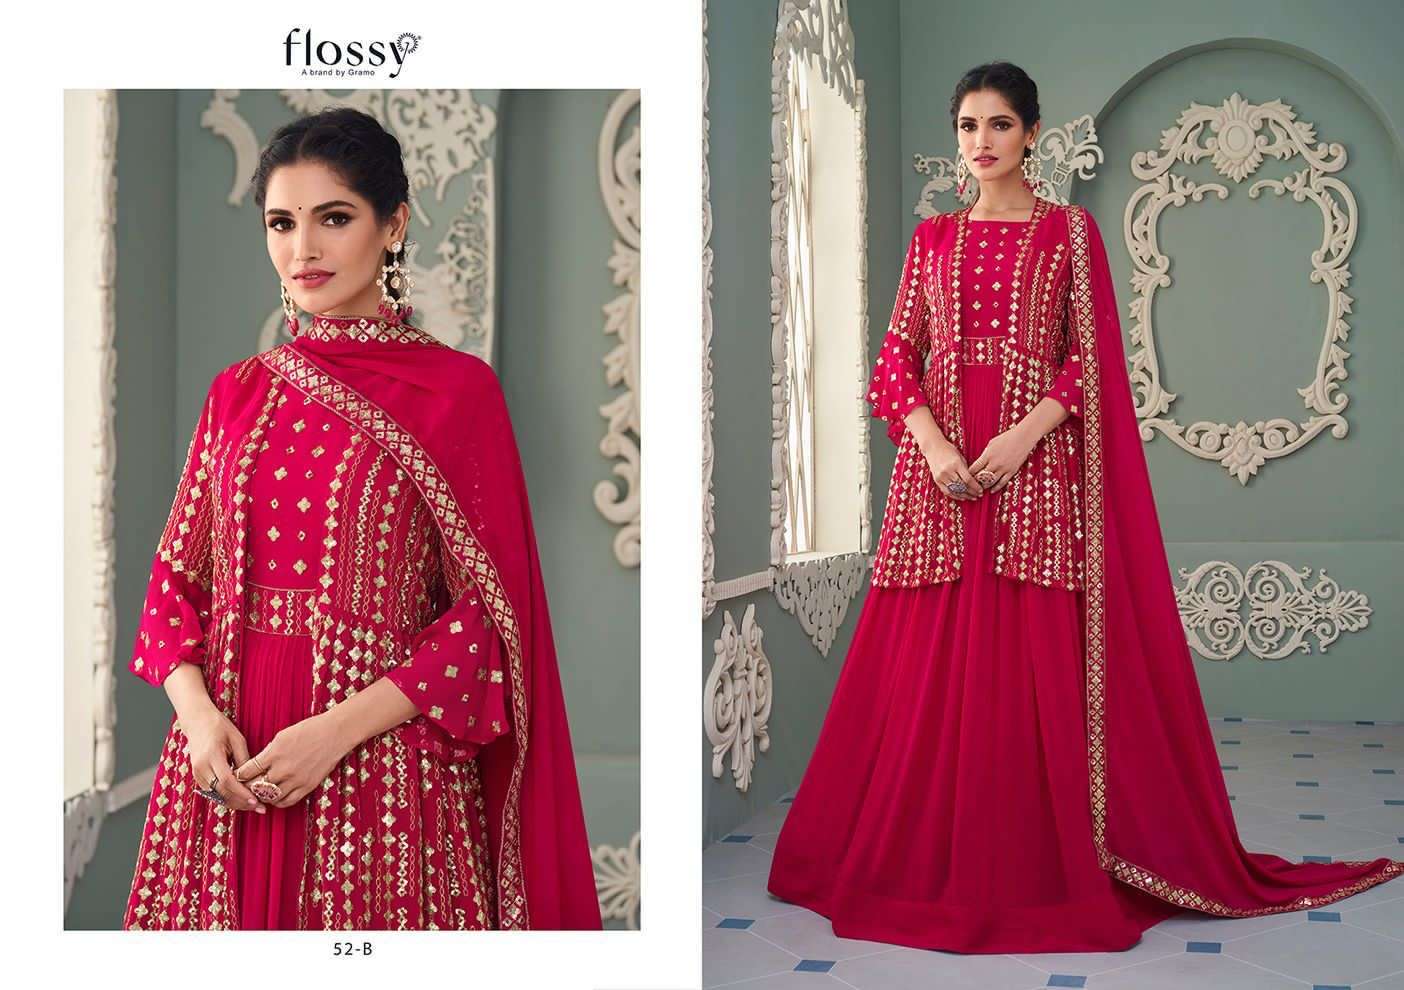 flossy naksh colour plus vol 2 georgette embroidered salwar kameez wholesale price surat